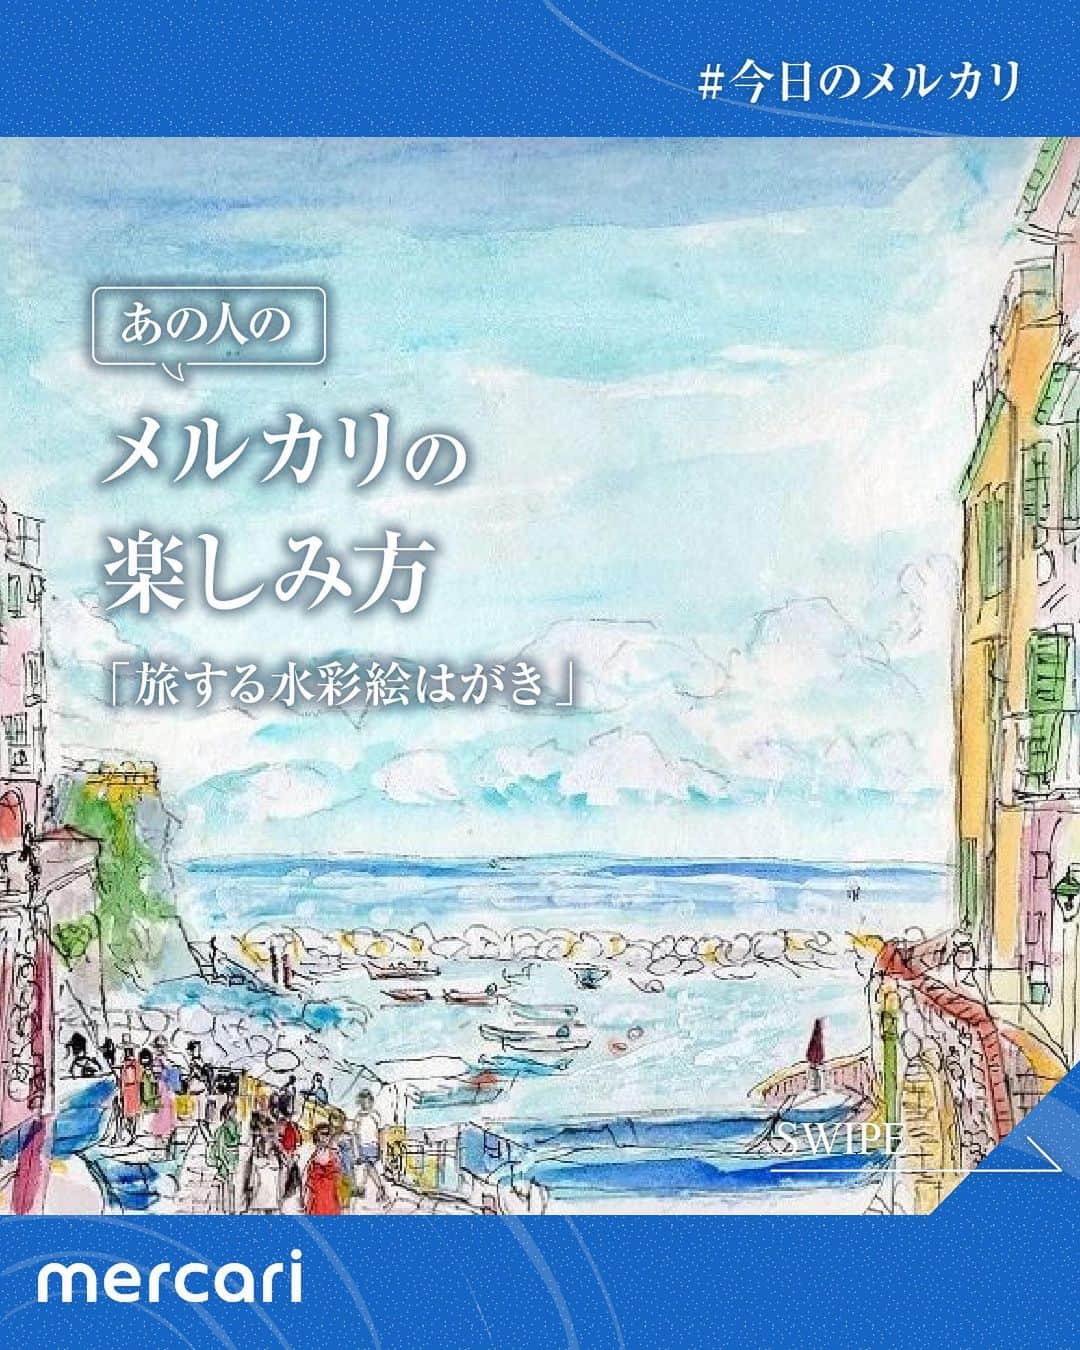 mercari_jpのインスタグラム：「＼ あの人のメルカリの楽しみ方 ／ テーマ「旅する水彩絵はがき」  この投稿では、ひとりのメルカリ利用者さんに焦点を当てて メルカリの楽しみ方を素敵な写真とともにご紹介します✨  今回ご紹介するのは 国内と海外の美しい風景を水彩画で描き メルカリで販売されているアーティストの @aso.1592さん！  メルカリの楽しみ方についての新たな発見や 日々の暮らしにちょっとした変化が生まれる そんなきっかけになれば嬉しいです。  メルカリでは他にもたくさんのアイテムが出品されています🎨 ぜひメルカリアプリもチェックしてみてください◎  次回もお楽しみに♪  -------------------- #メルカリ #メルカリ出品 #メルカリ販売 #メルカリ活用 #メルカリ活用術 #メルカリ初心者 #メルカリデビュー #メルカリはじめました #フリマアプリ #出品 #フリマ #アート #水彩画 #風景画 #絵葉書 #絵はがき #ポストカード #ヨーロッパ #アートのある生活 #美しい風景 #水彩イラスト #水彩画アート #水彩画家」